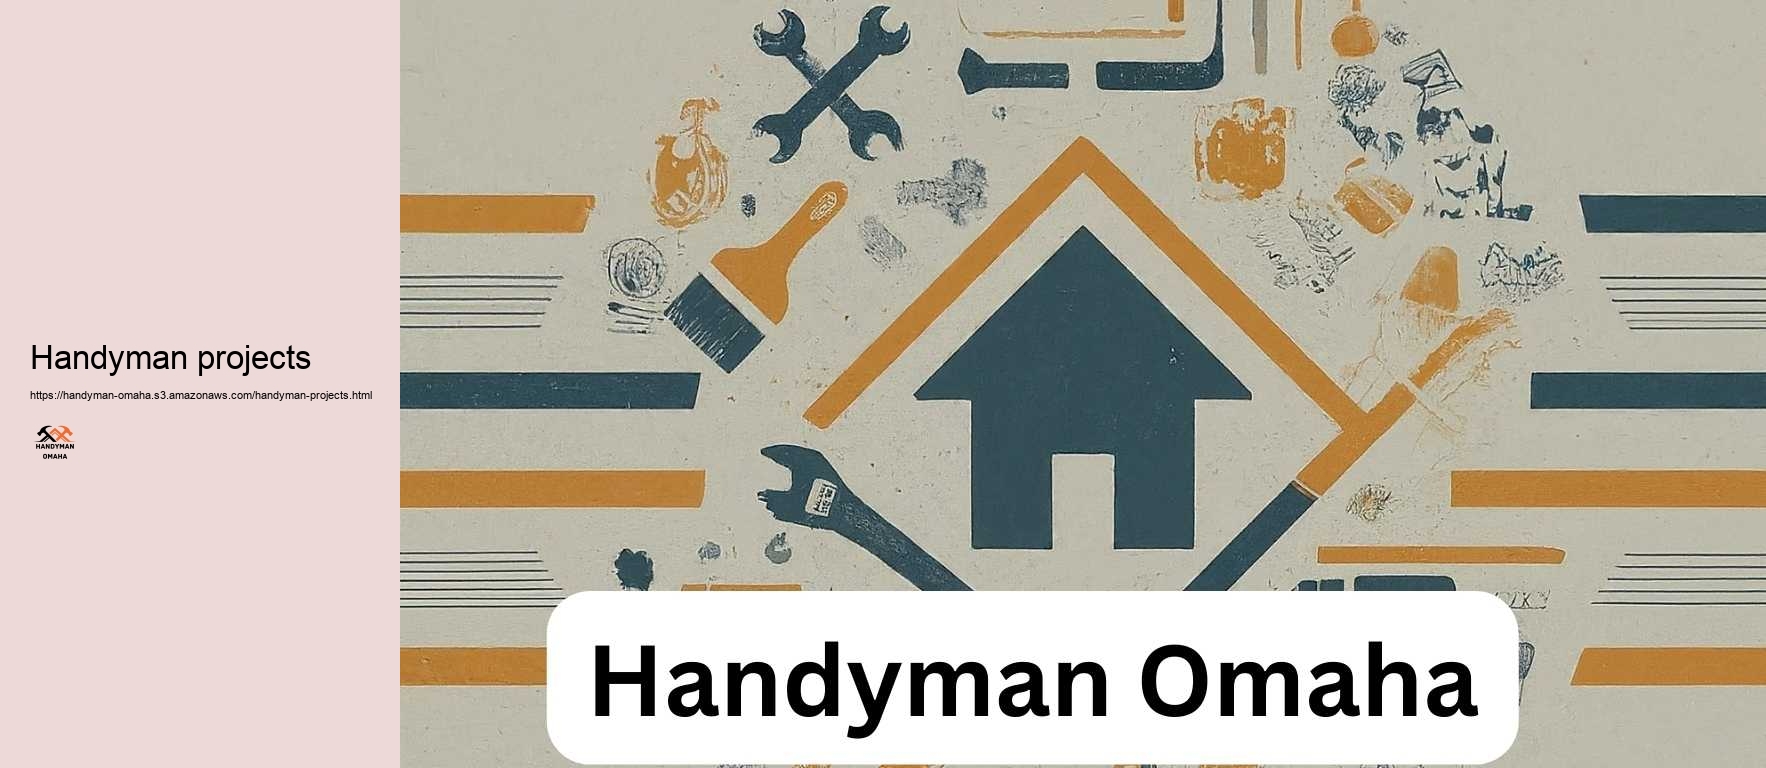 Handyman projects